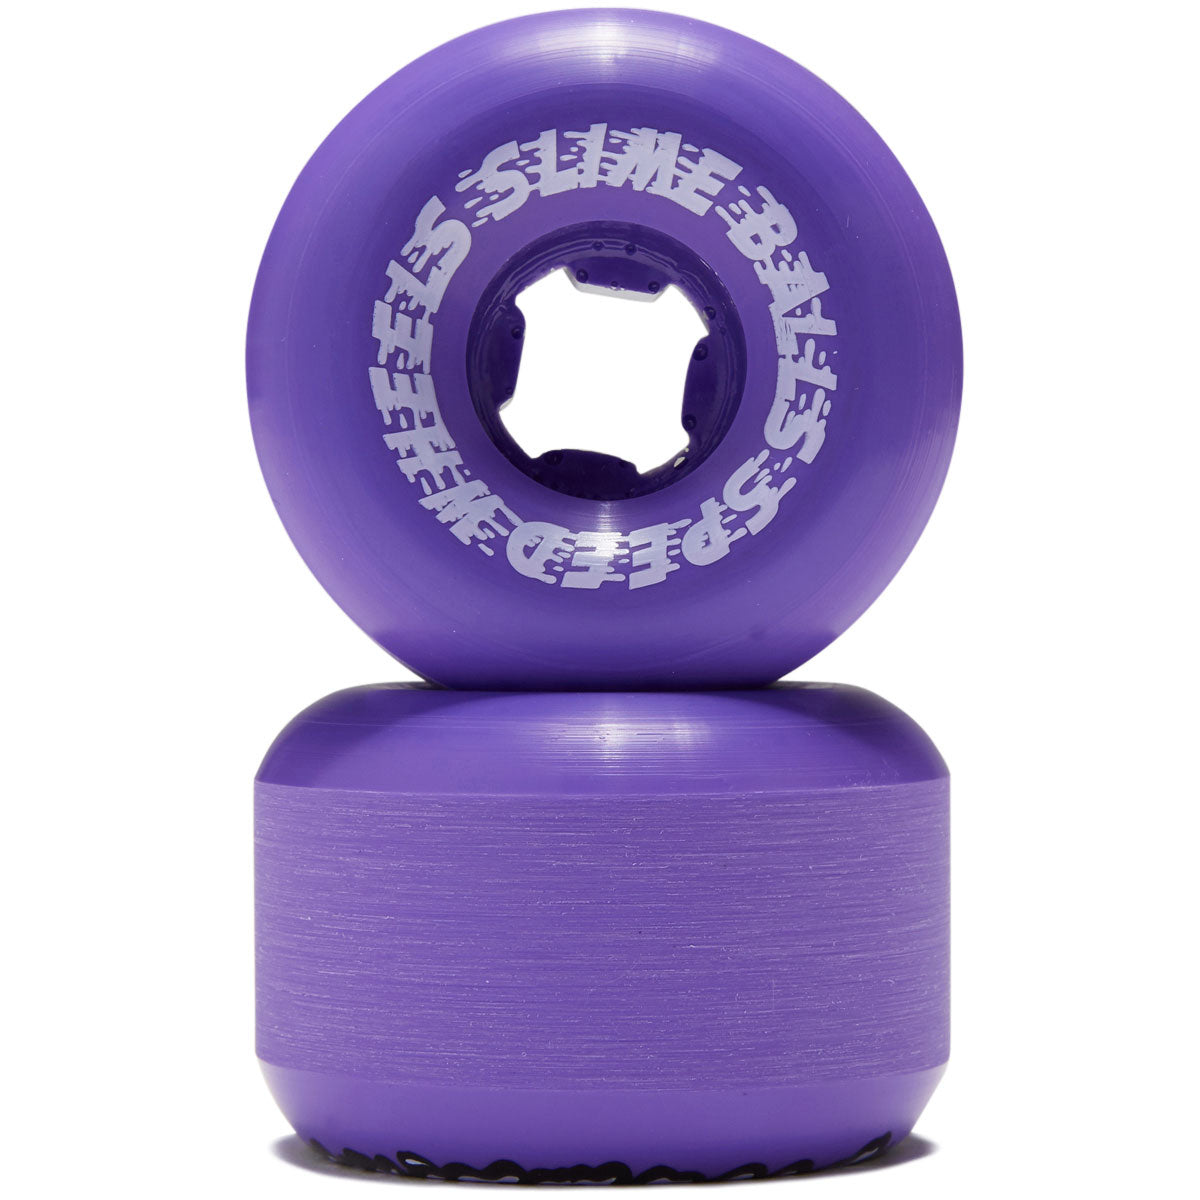 Slime Balls Nora Vasconcellos Guest Vomit Mini 99a Skateboard Wheels - Purple - 56mm image 2